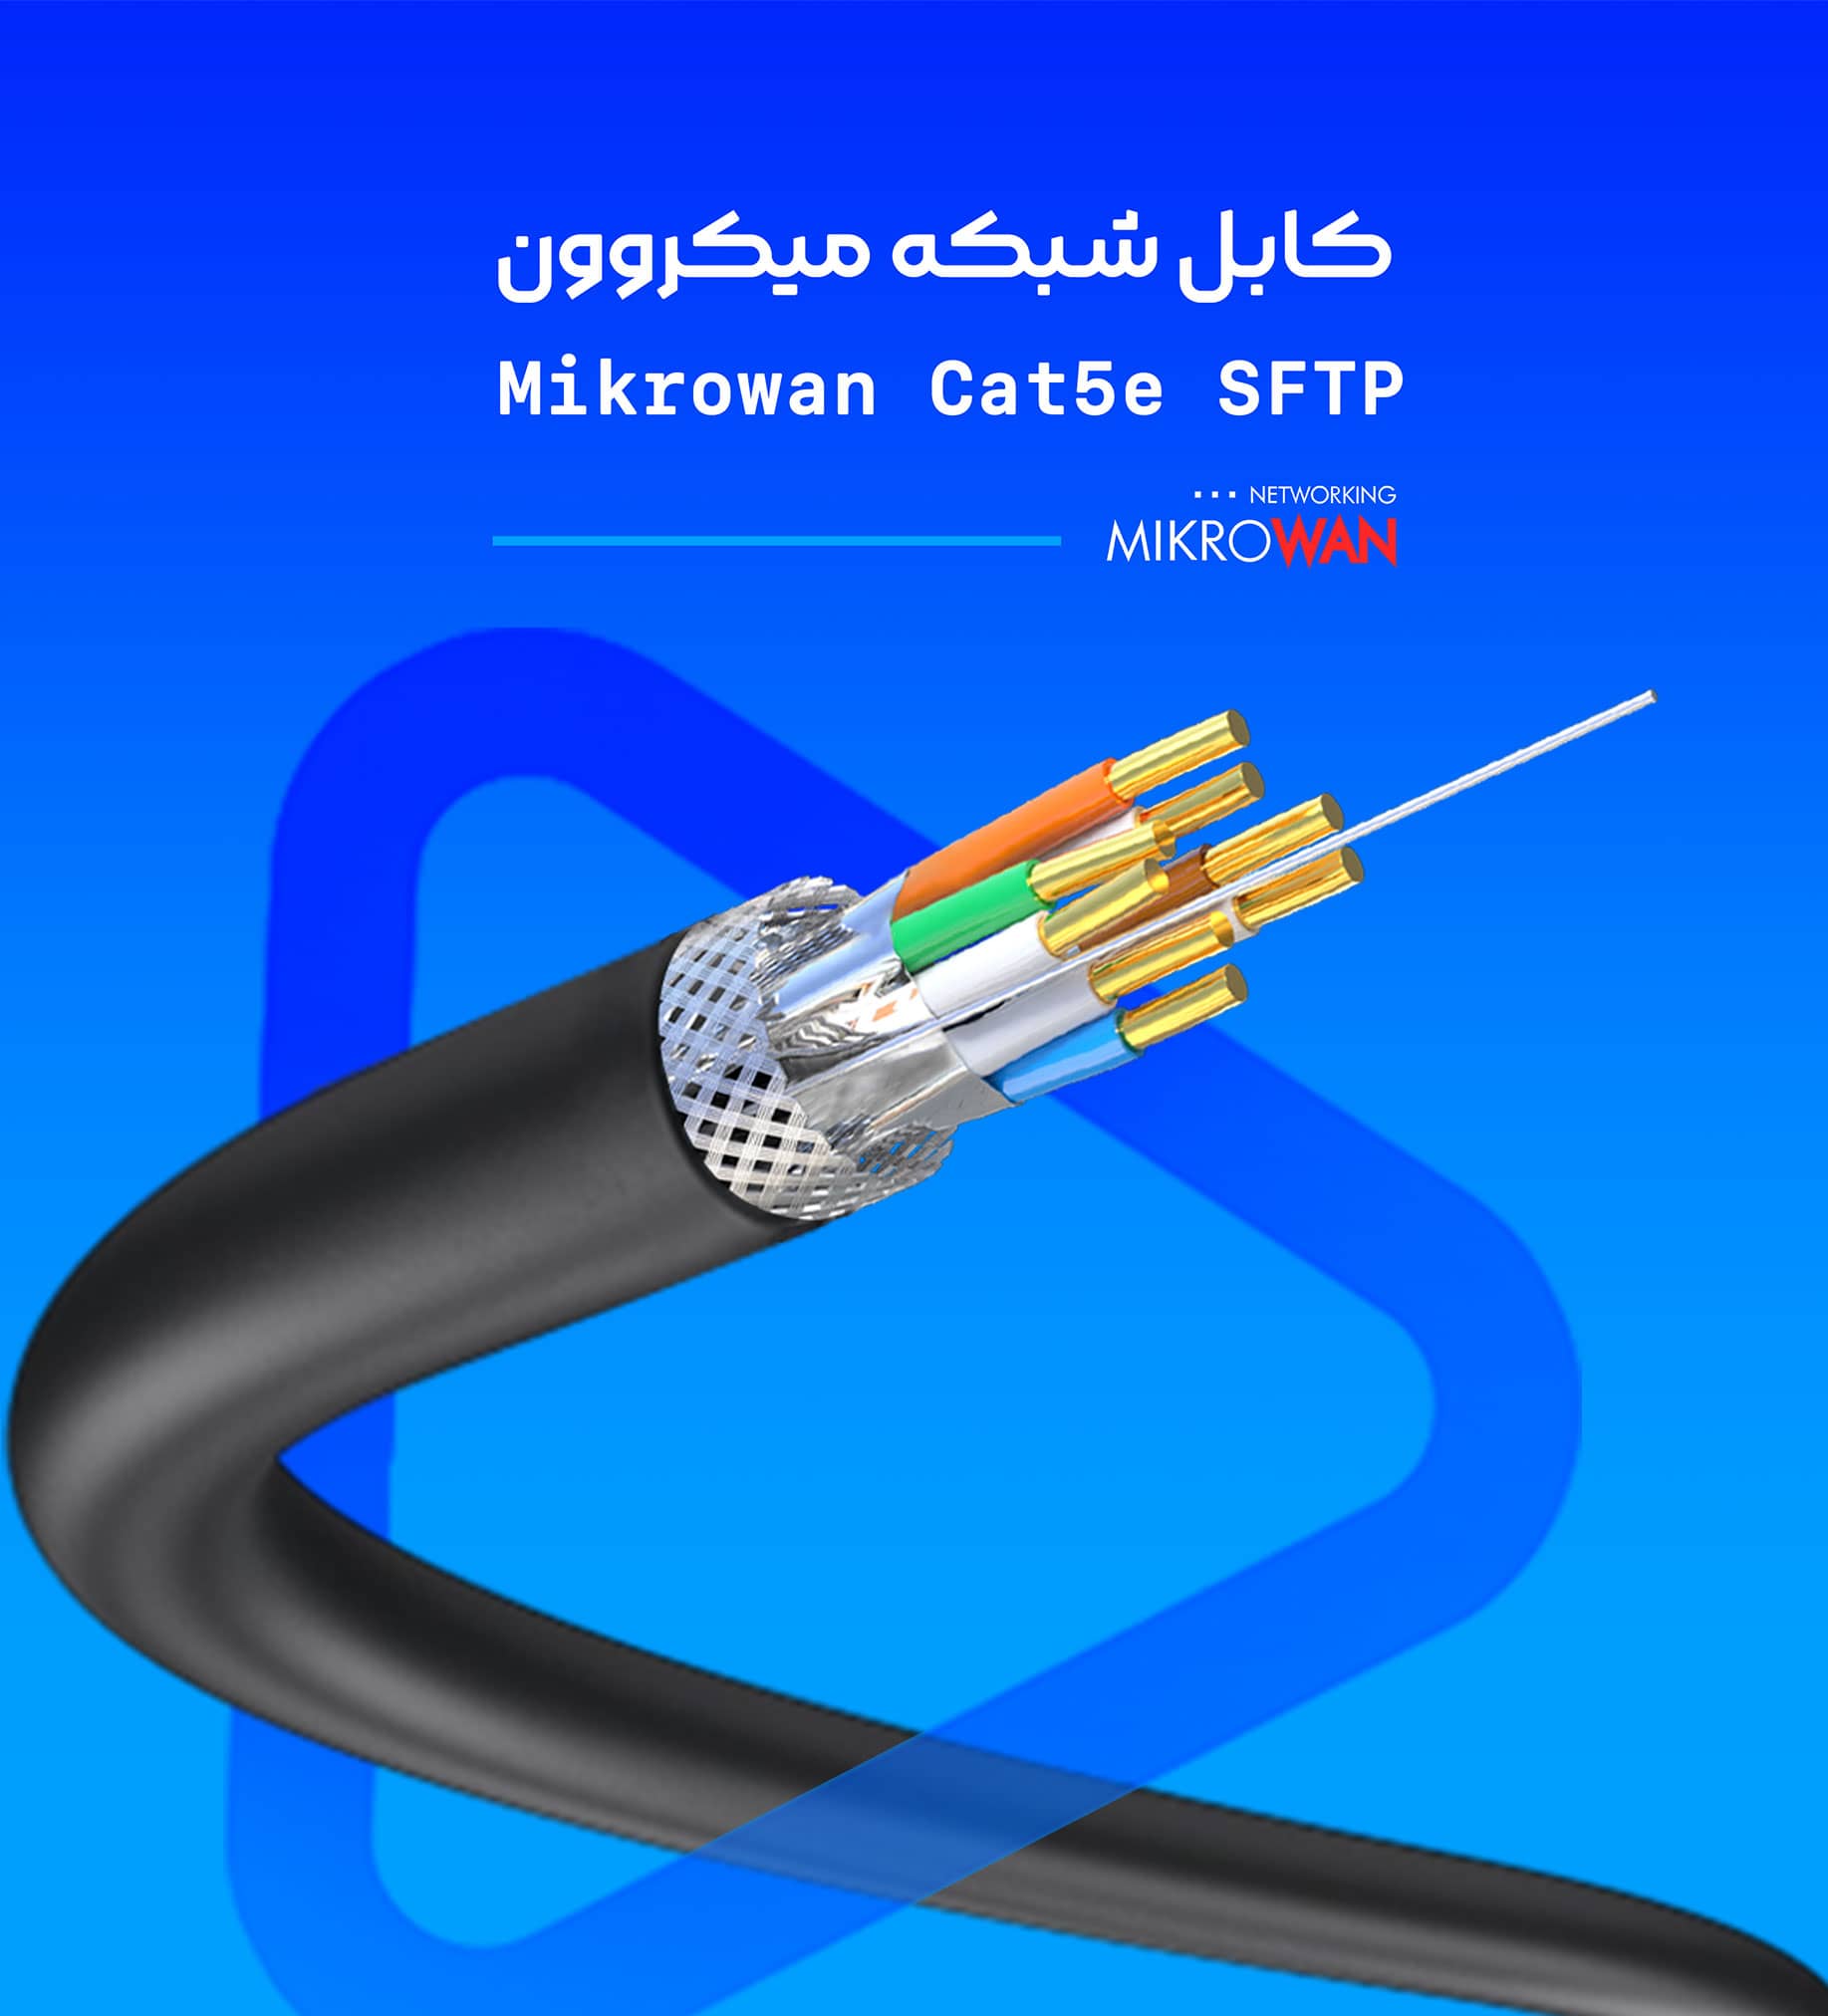 خرید کابل شبکه میکروون مدل Mikrowan Cat5e SFTP